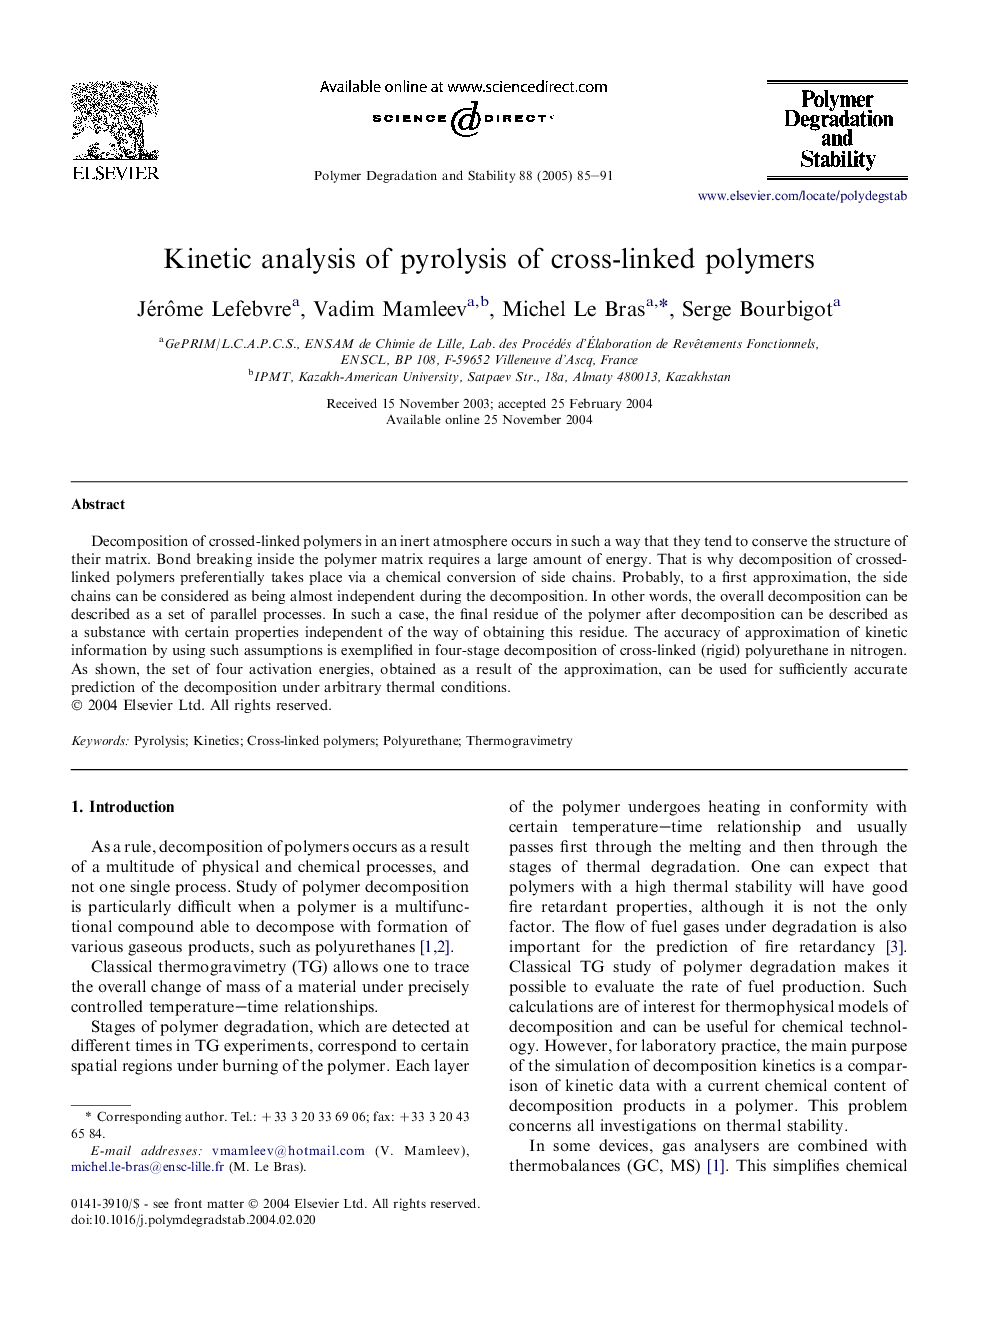 Kinetic analysis of pyrolysis of cross-linked polymers